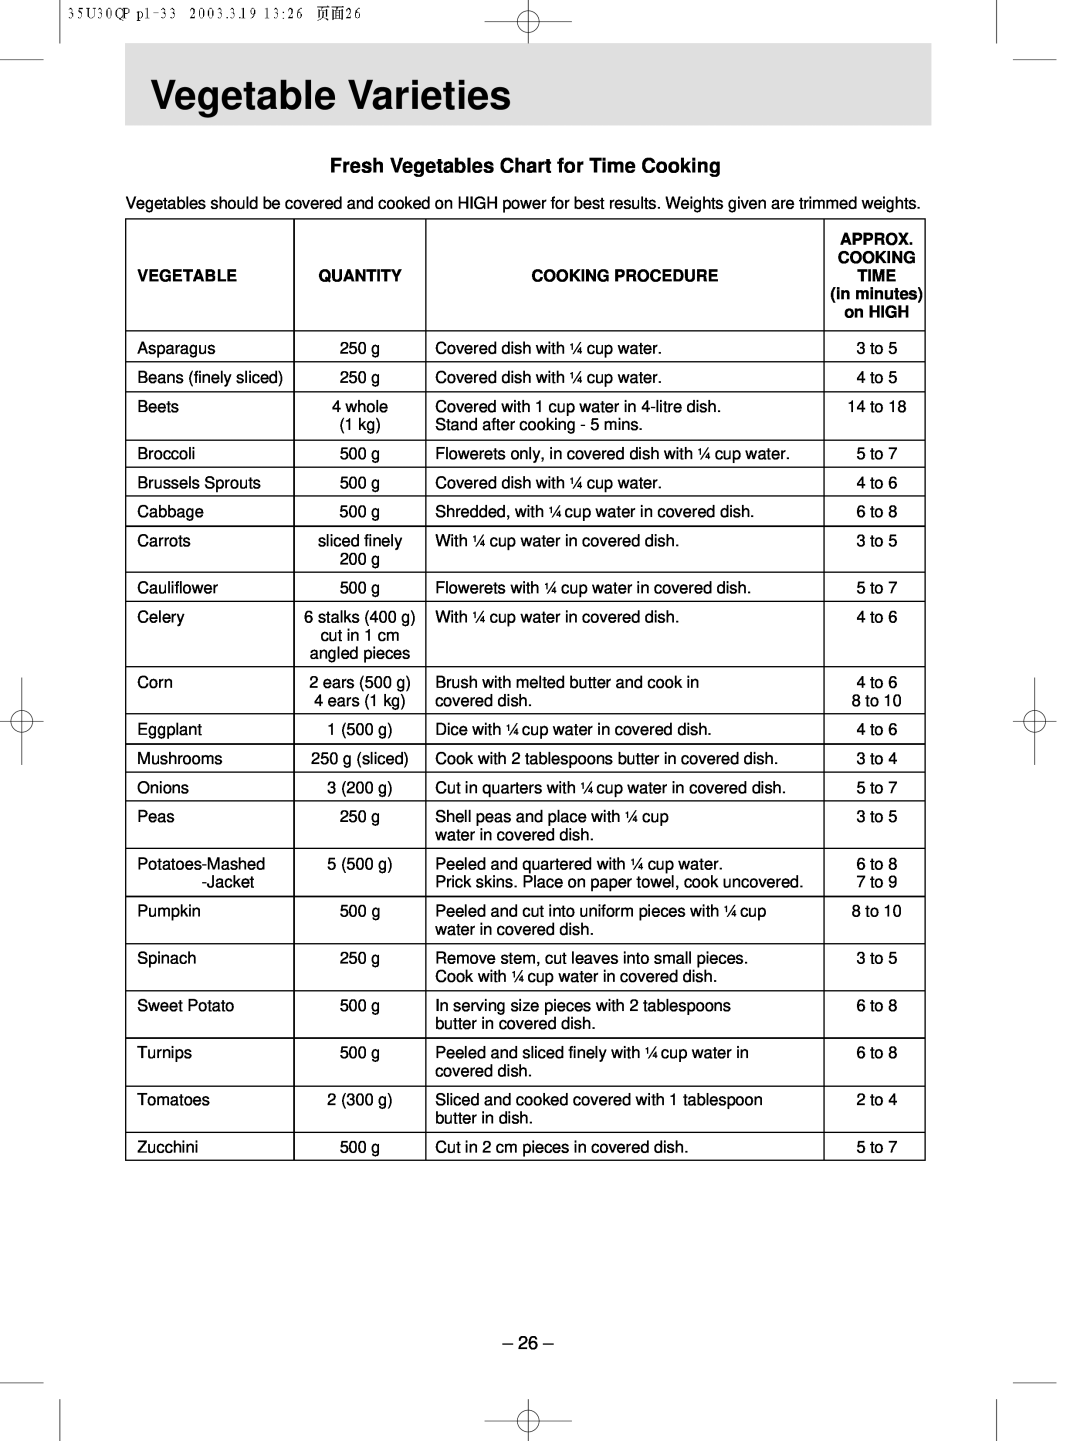 Panasonic NN-MX21 manual Fresh Vegetables Chart for Time Cooking, Vegetable Varieties 